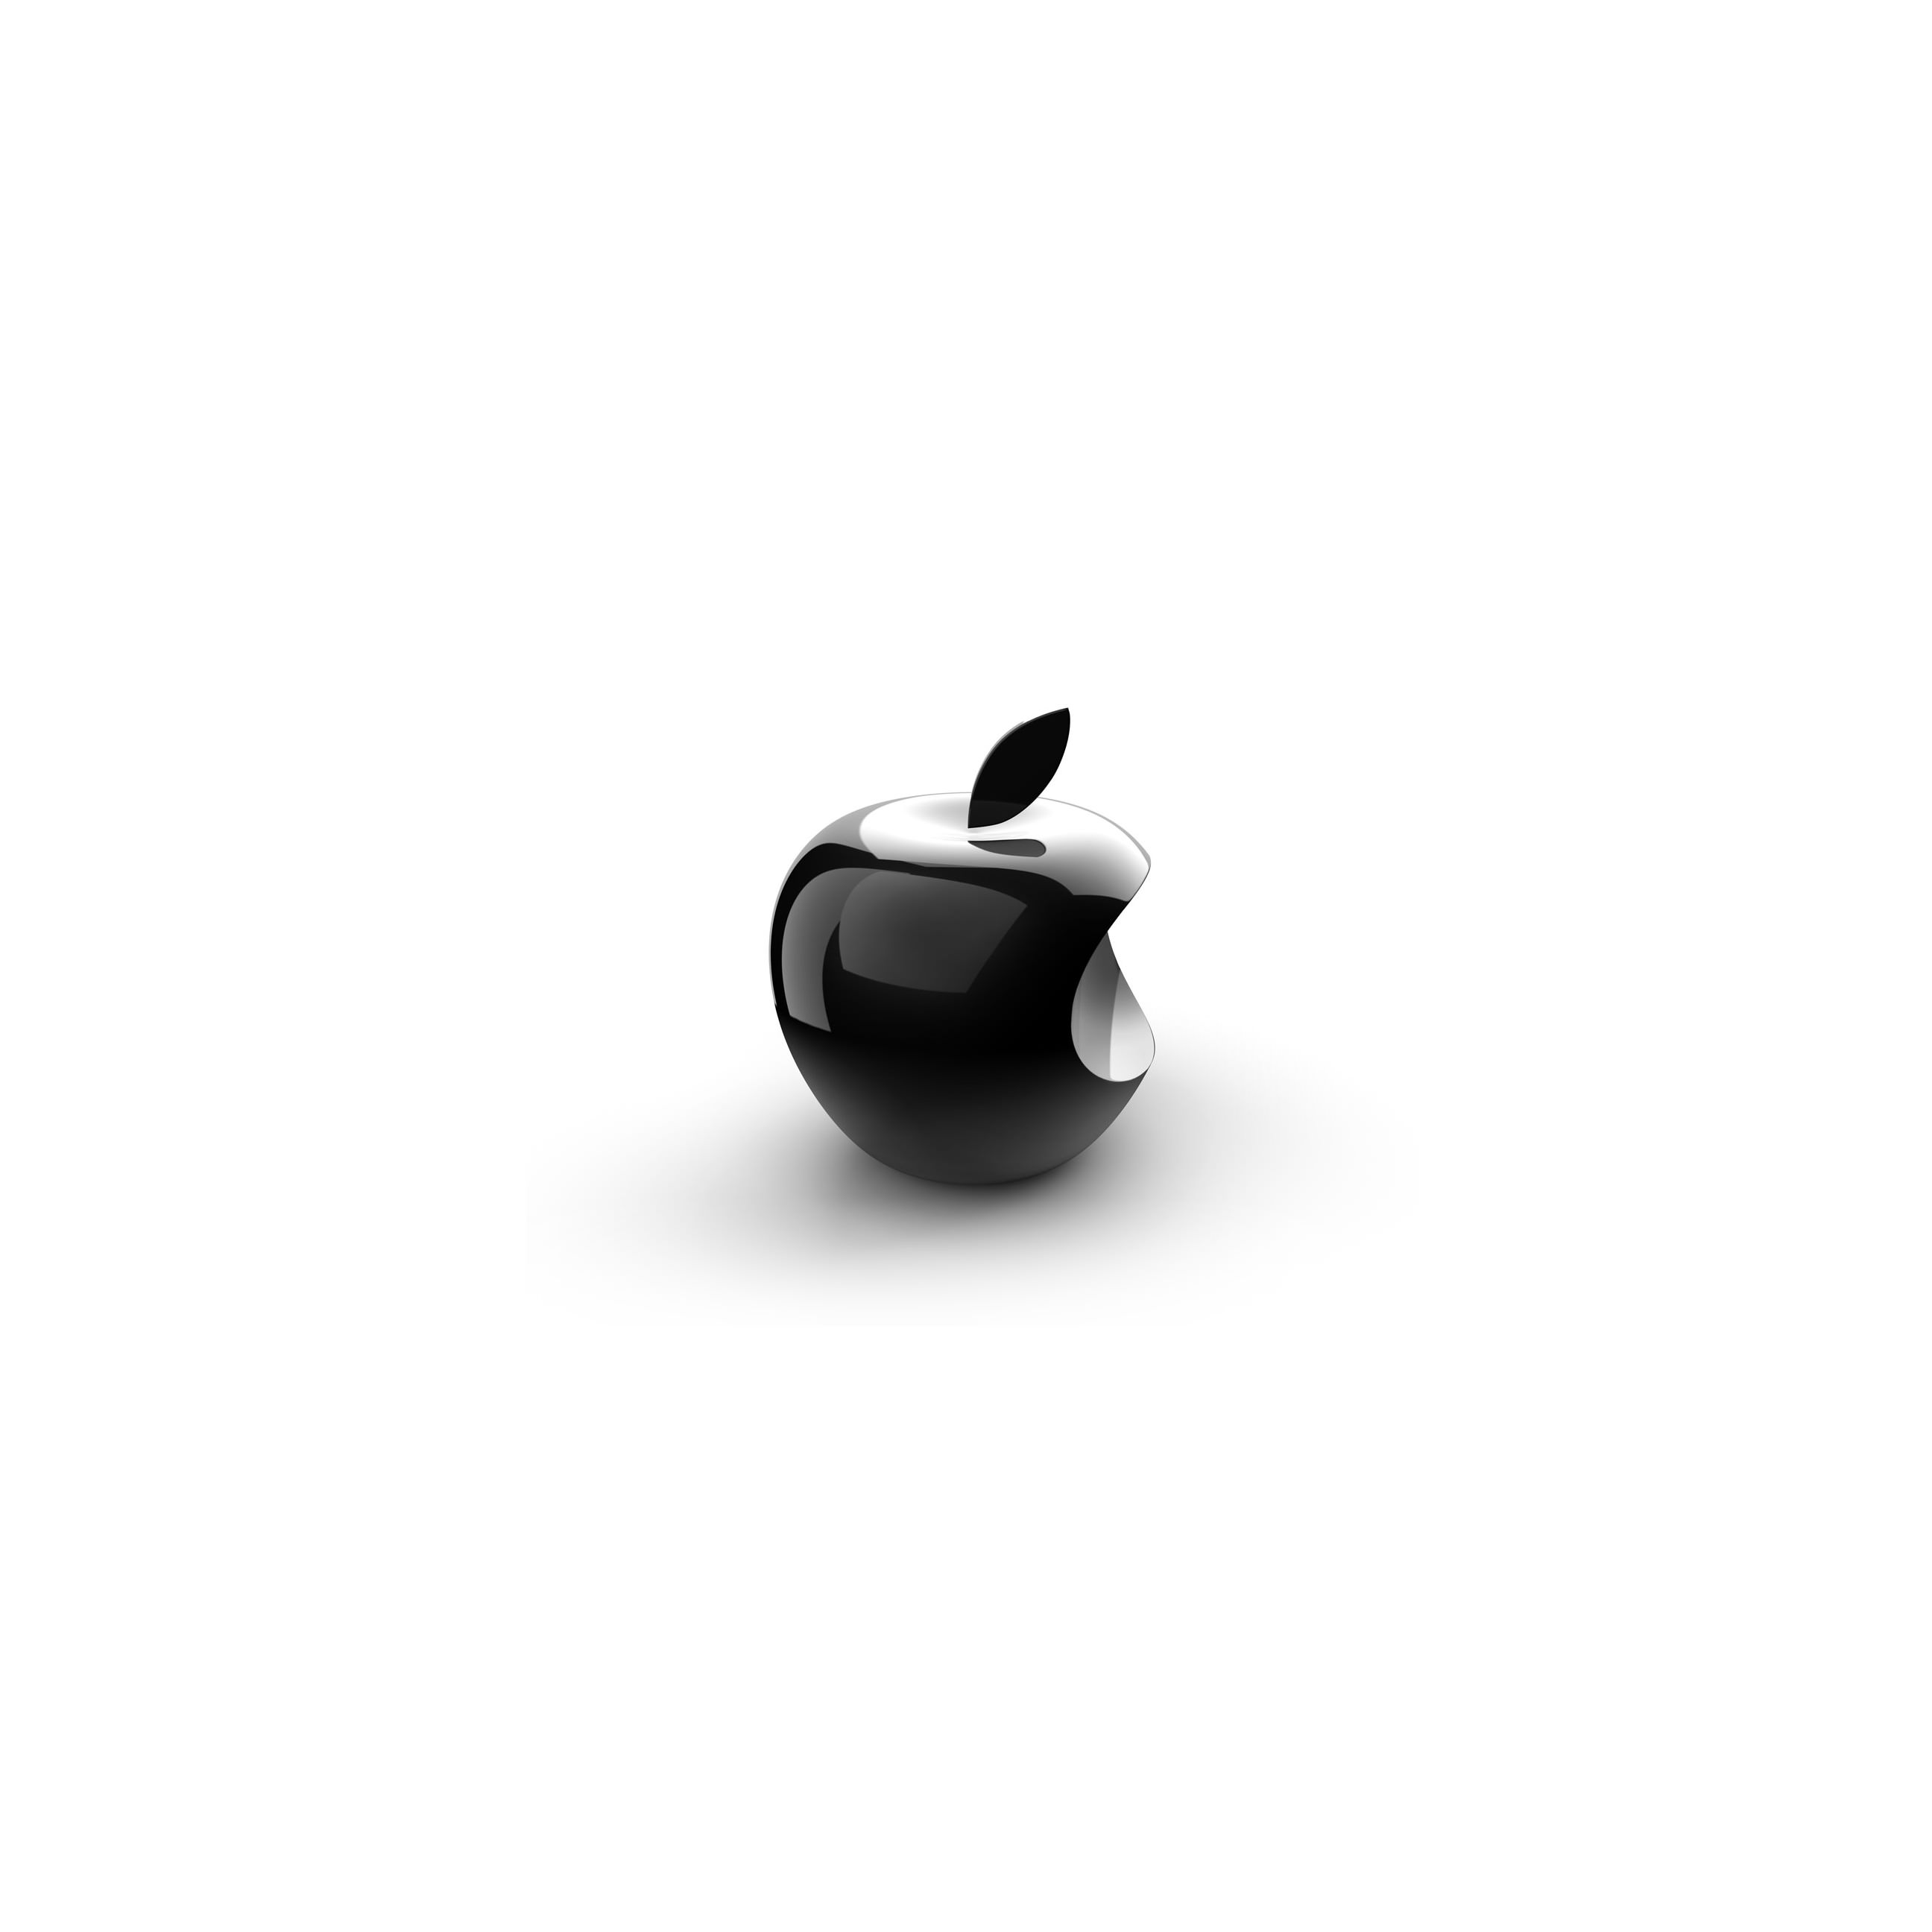 Apple Logo 3d Black And White Wallpaper Sc iPhone6plus